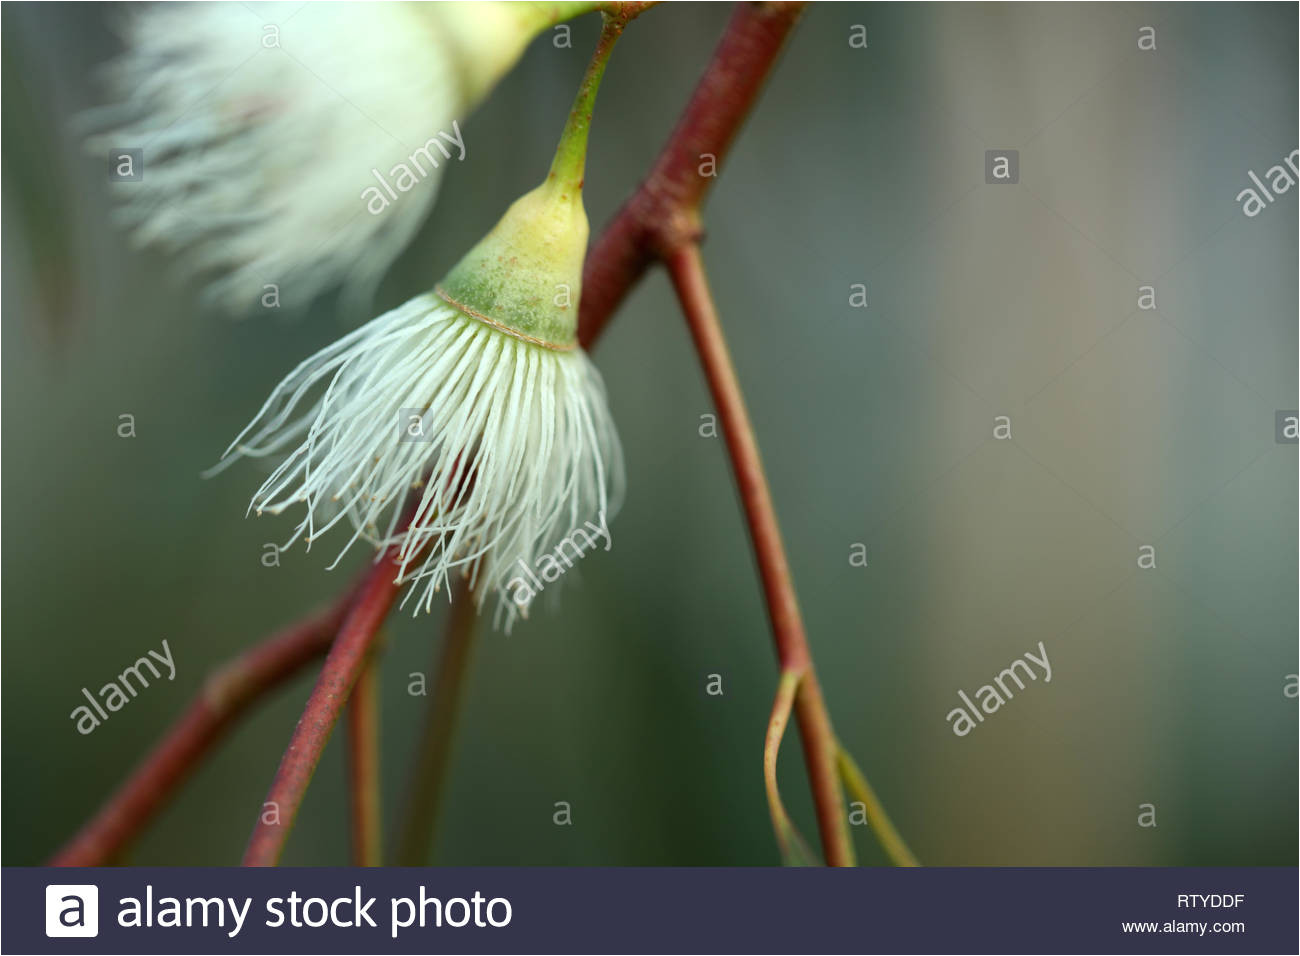 eucalyptus tree blossom rtyddf jpg